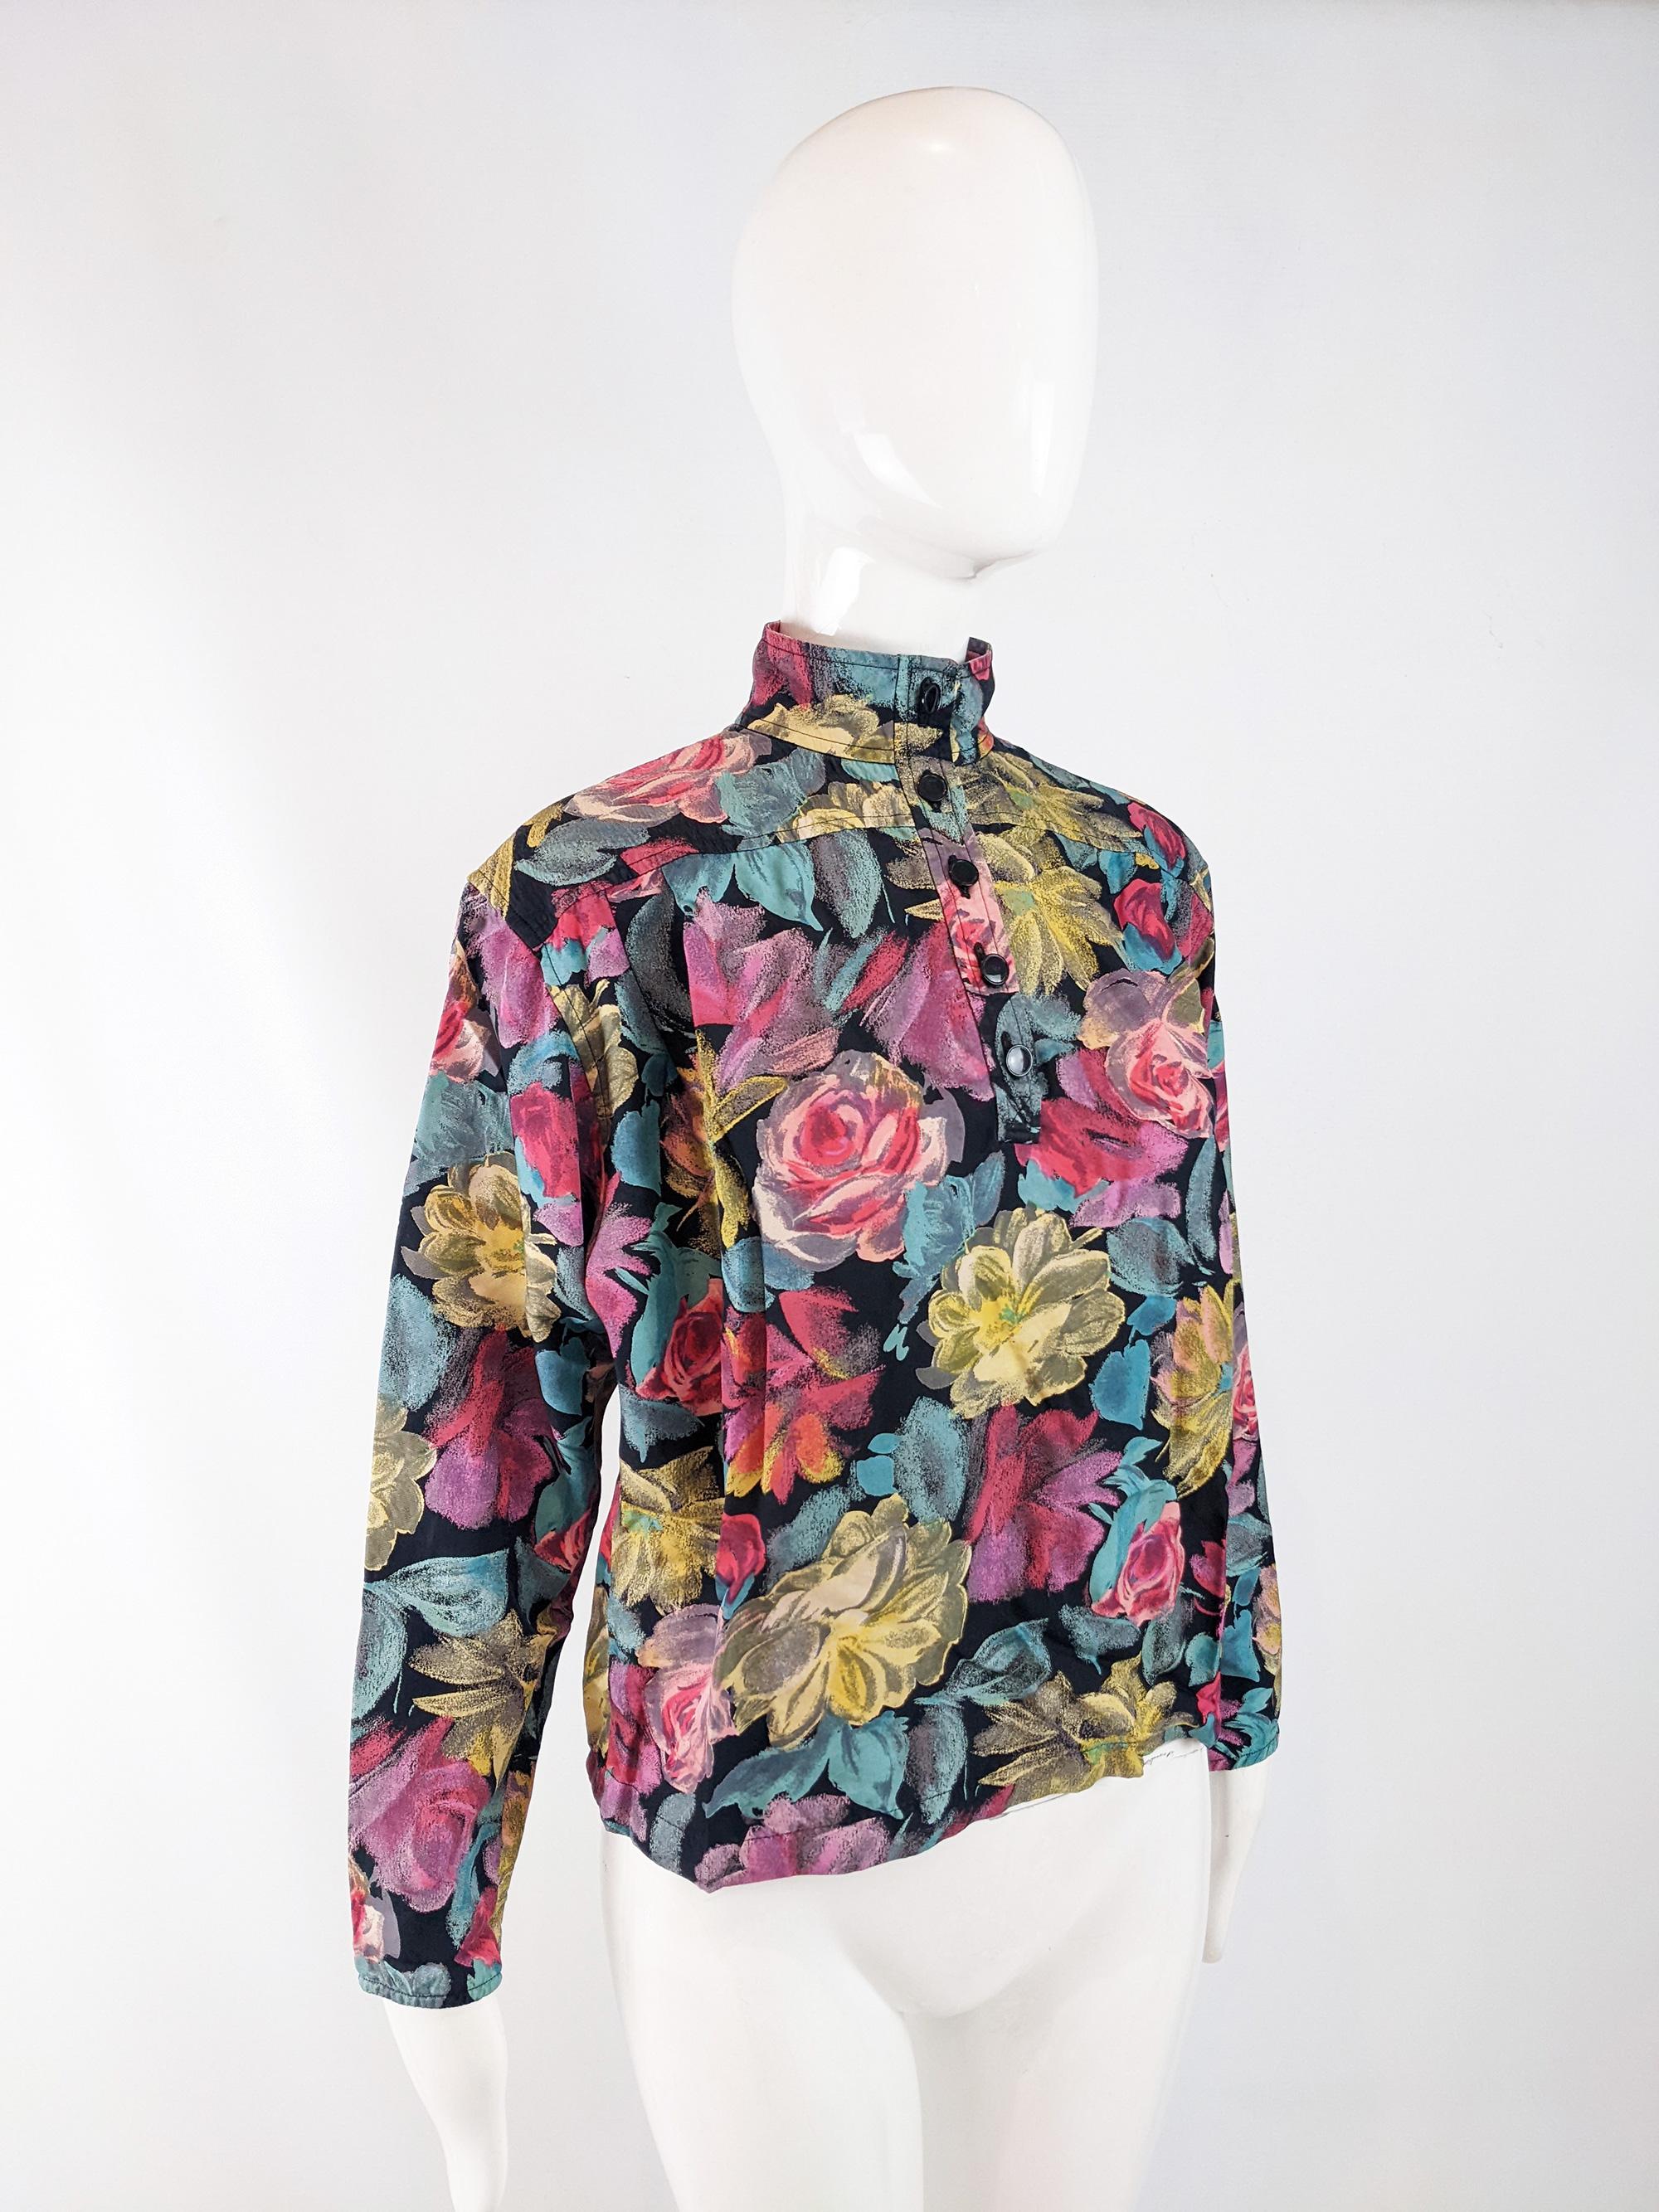 Gray Emanuel Ungaro Vintage 80s Bold Floral Print Long Sleeve Blouse Shirt, 1980s